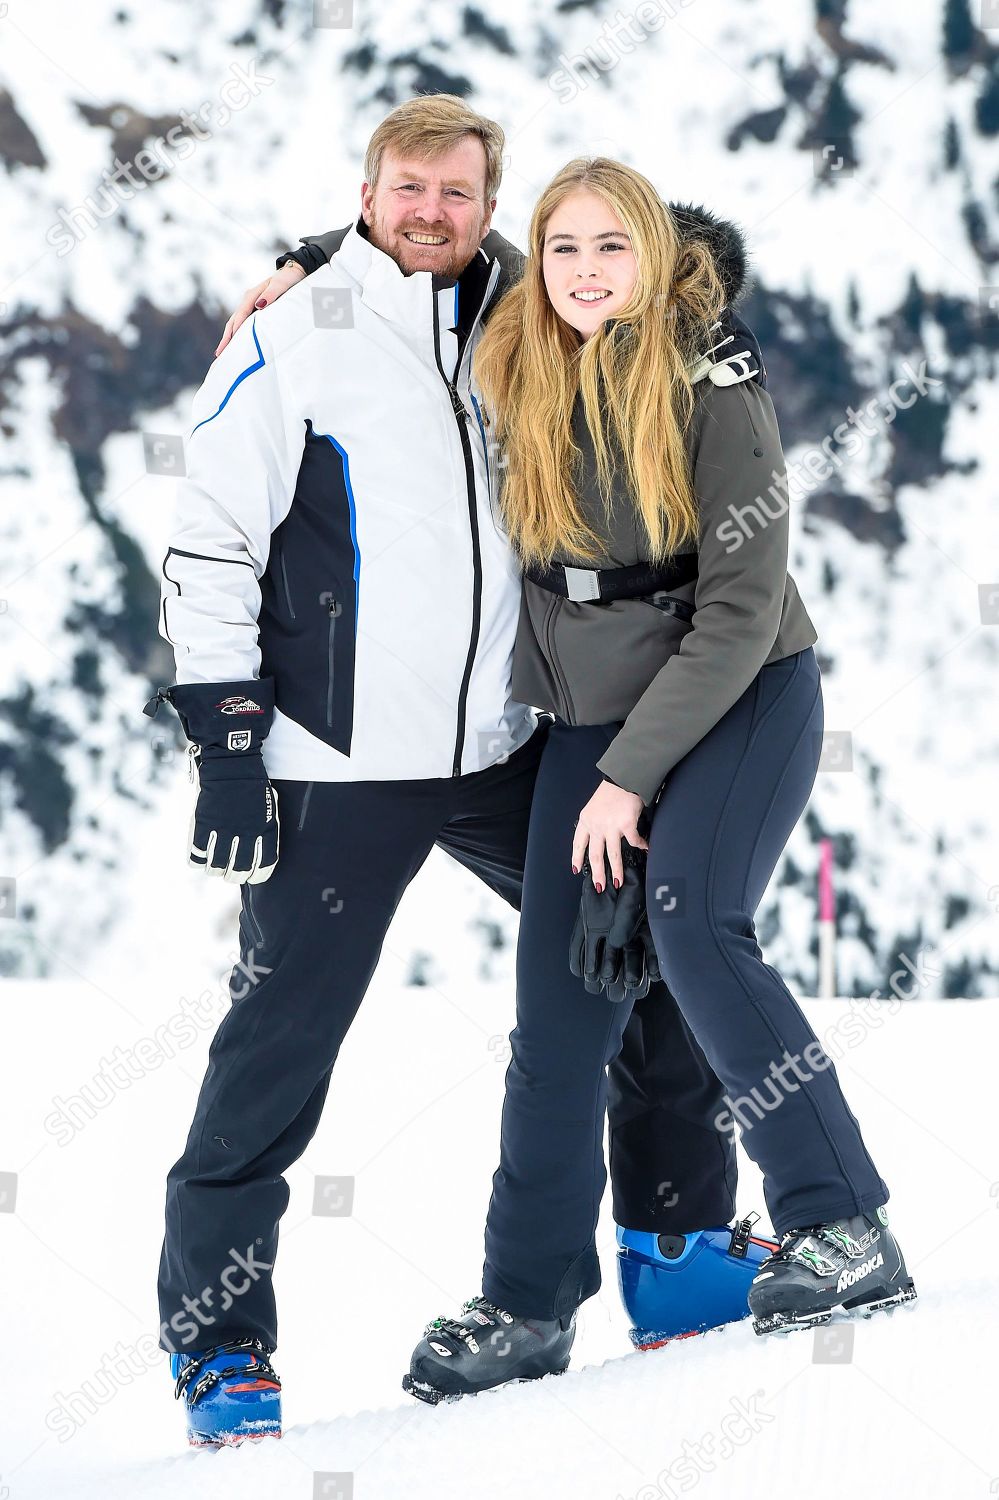 dutch-royal-family-winter-holiday-photocall-lech-austria-shutterstock-editorial-10566567v.jpg